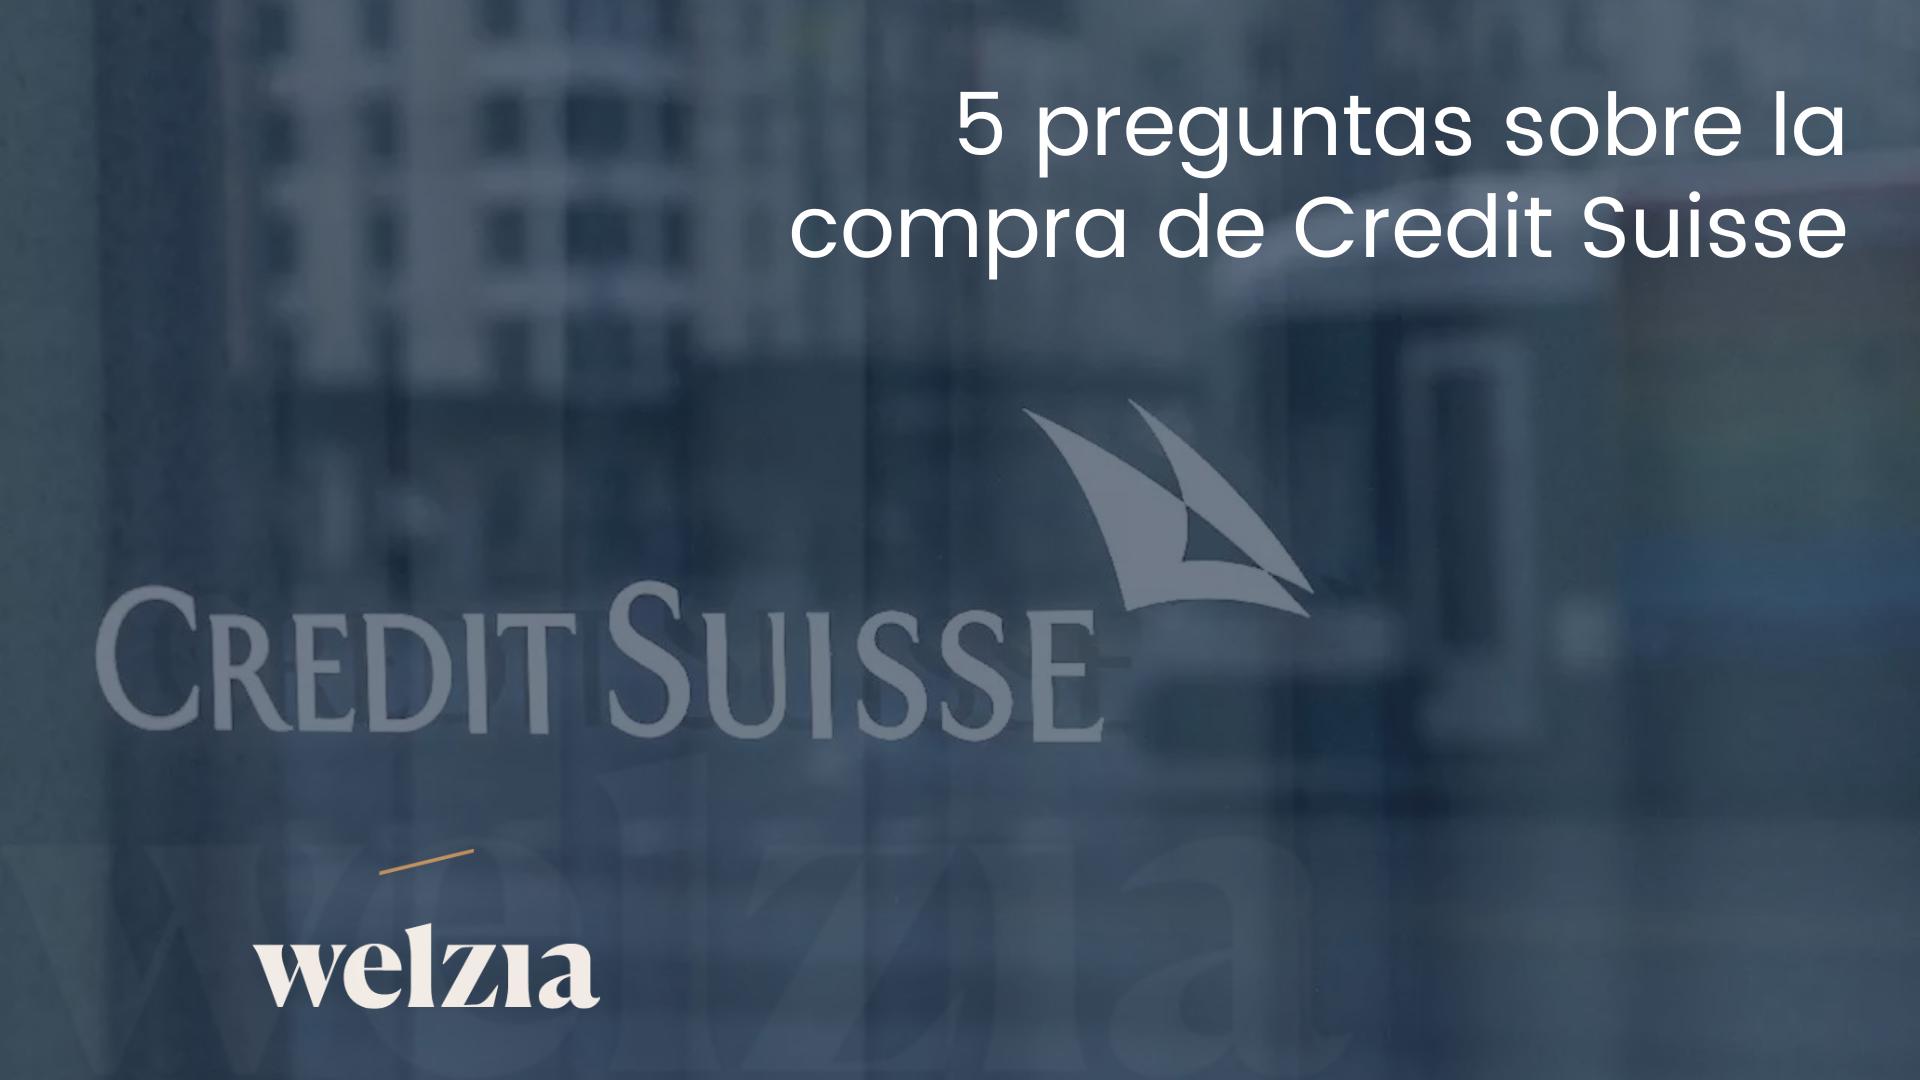 UBS compra Credit Suisse